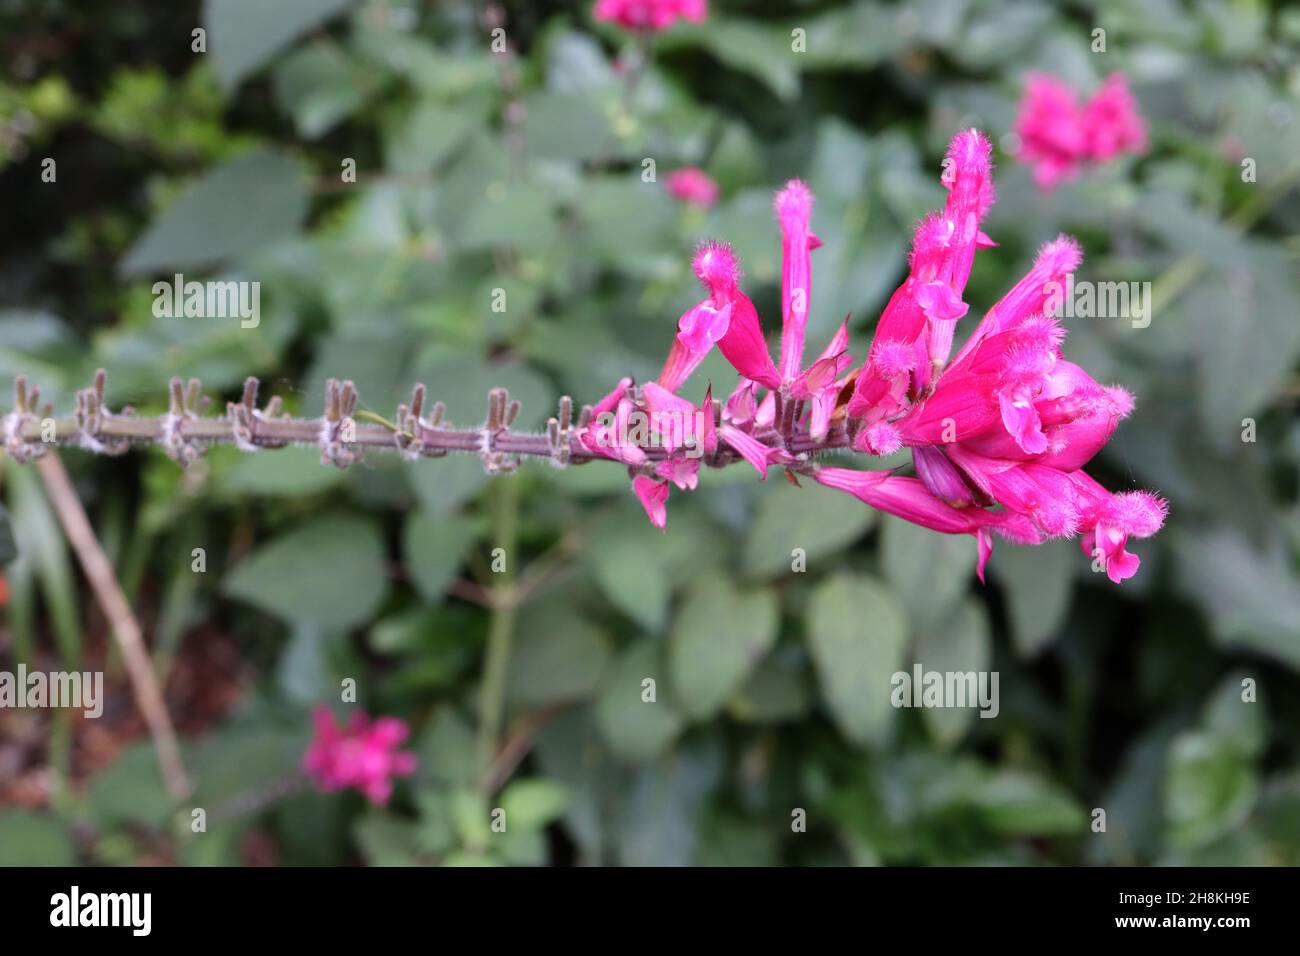 Salvia involucrata ‘Bethellii’ Rosenblatt-Salbei Bethellii – röhrenförmige, tiefrosa Blüten mit flauschigen Spitzen, November, England, Großbritannien Stockfoto